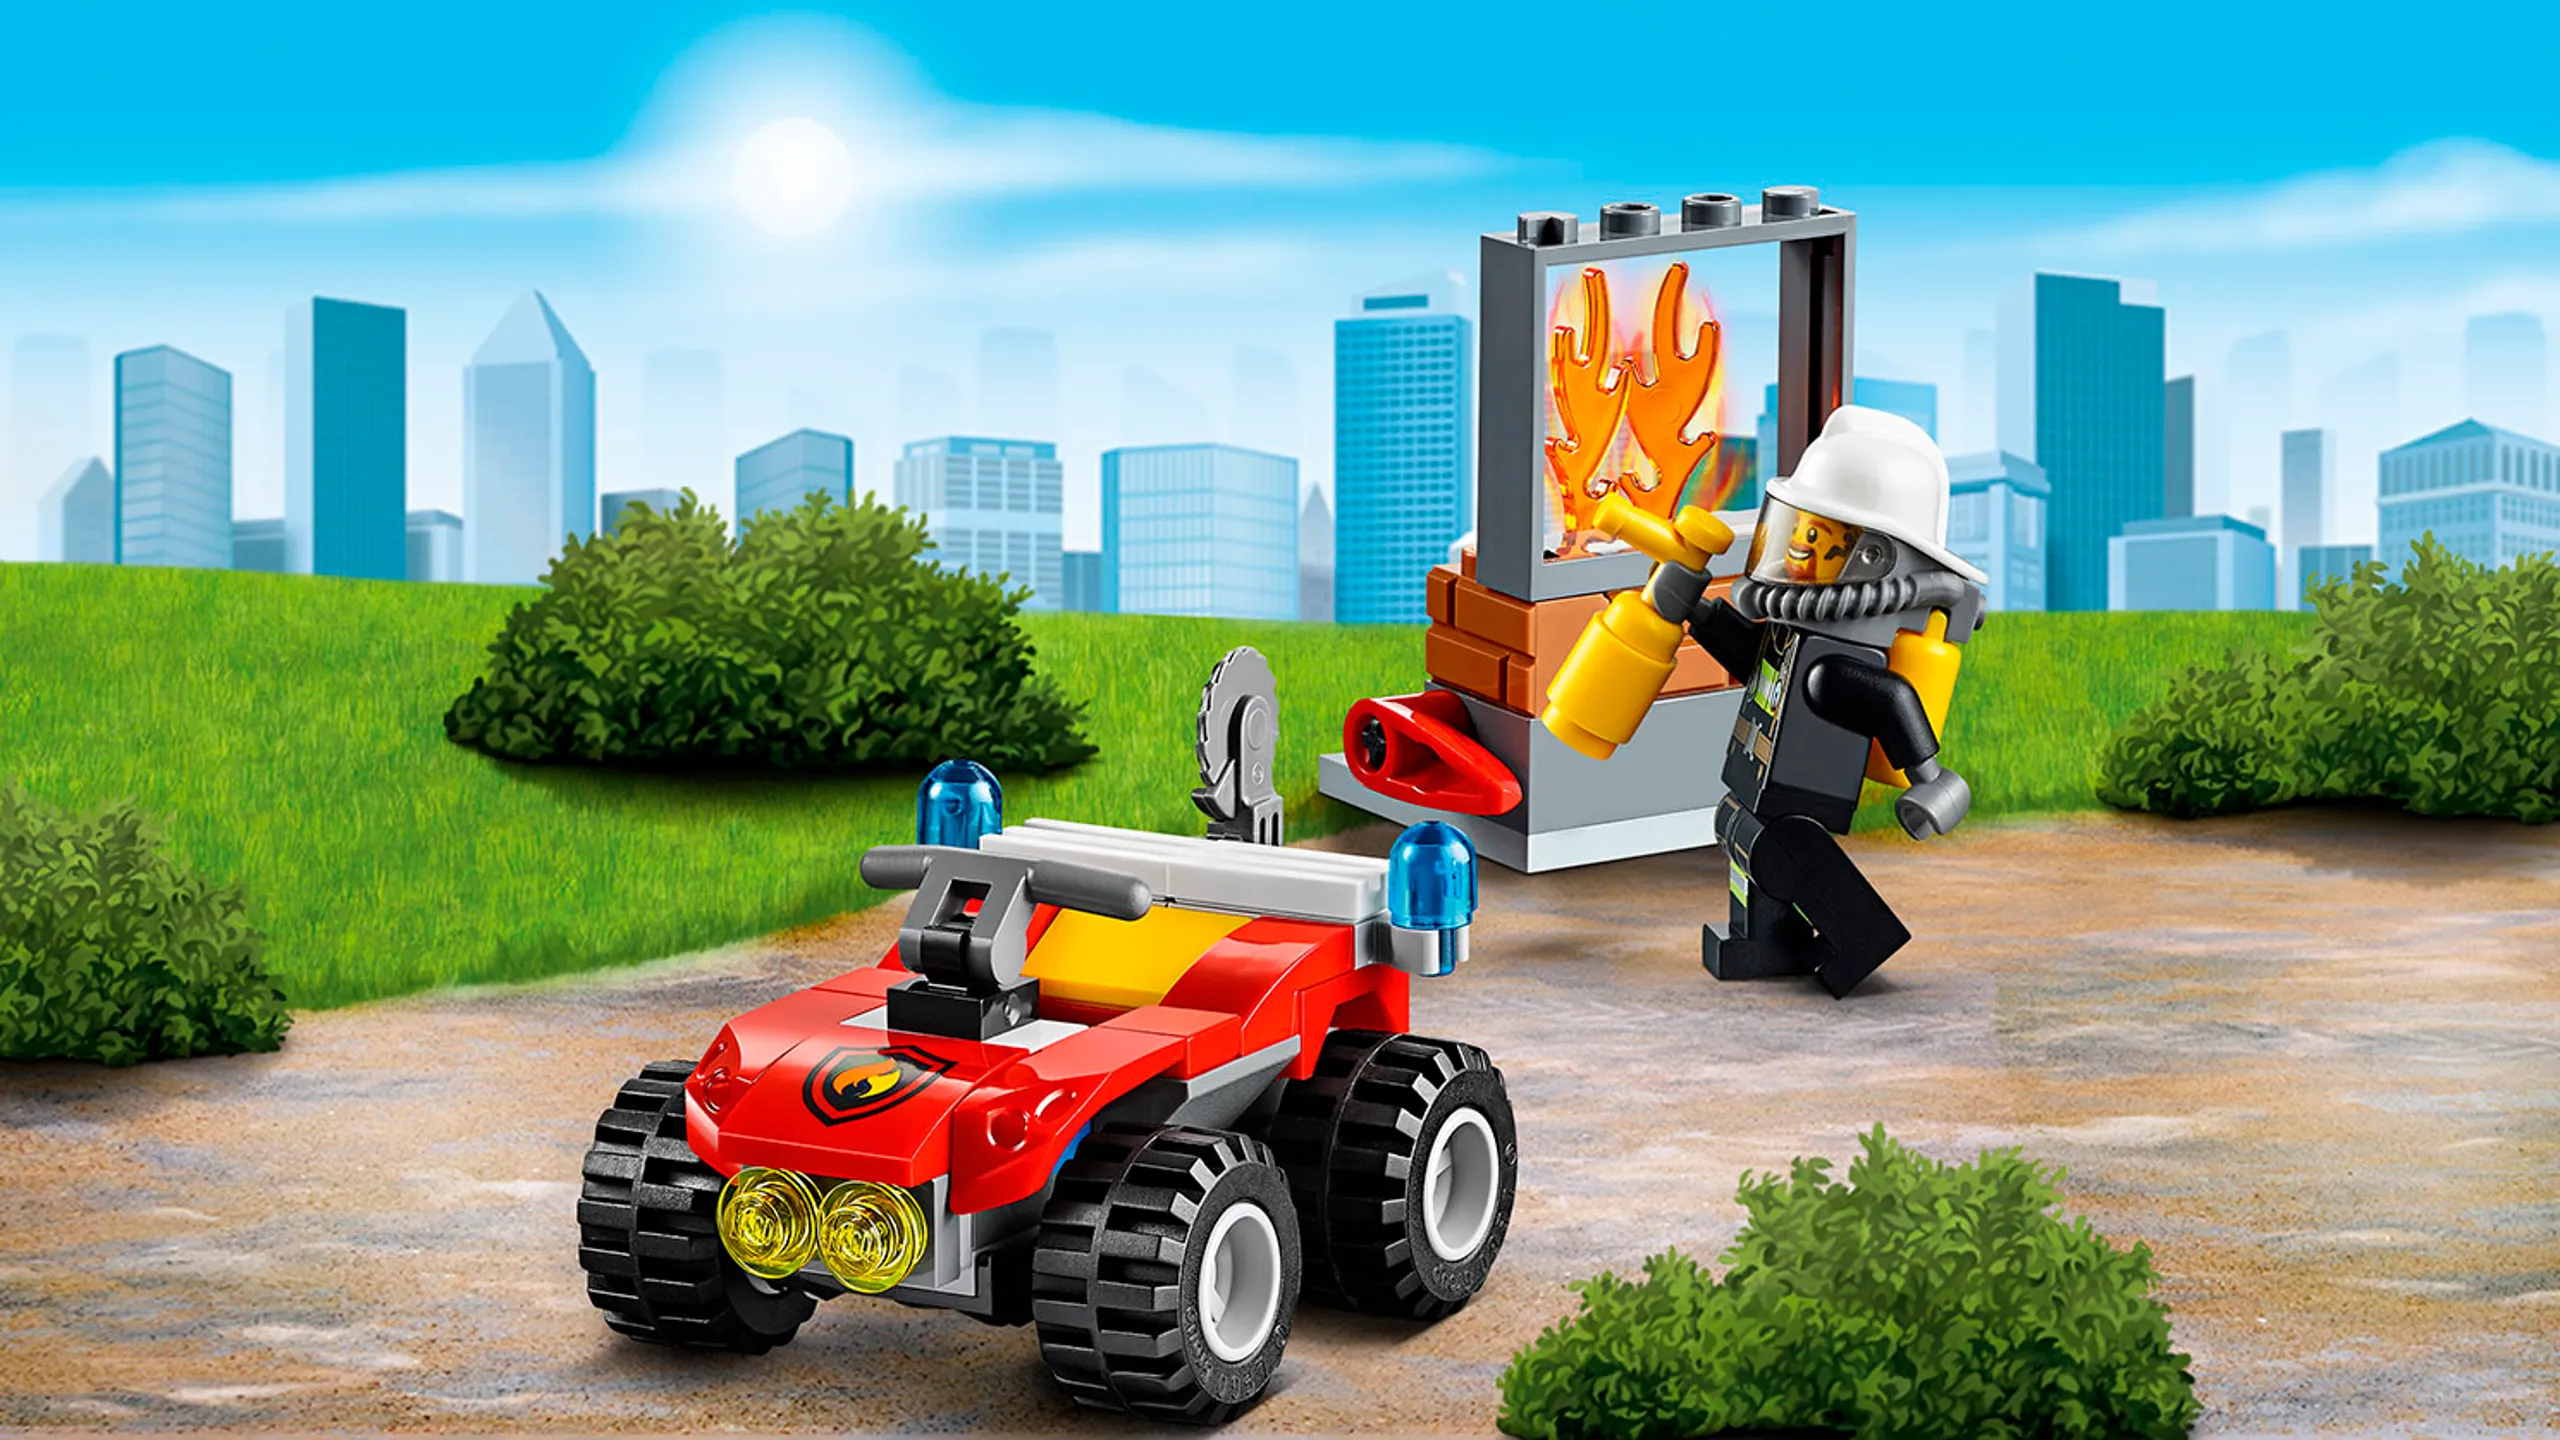 LEGO City firefighter minifigure putting out fire – Fire ATV 60105